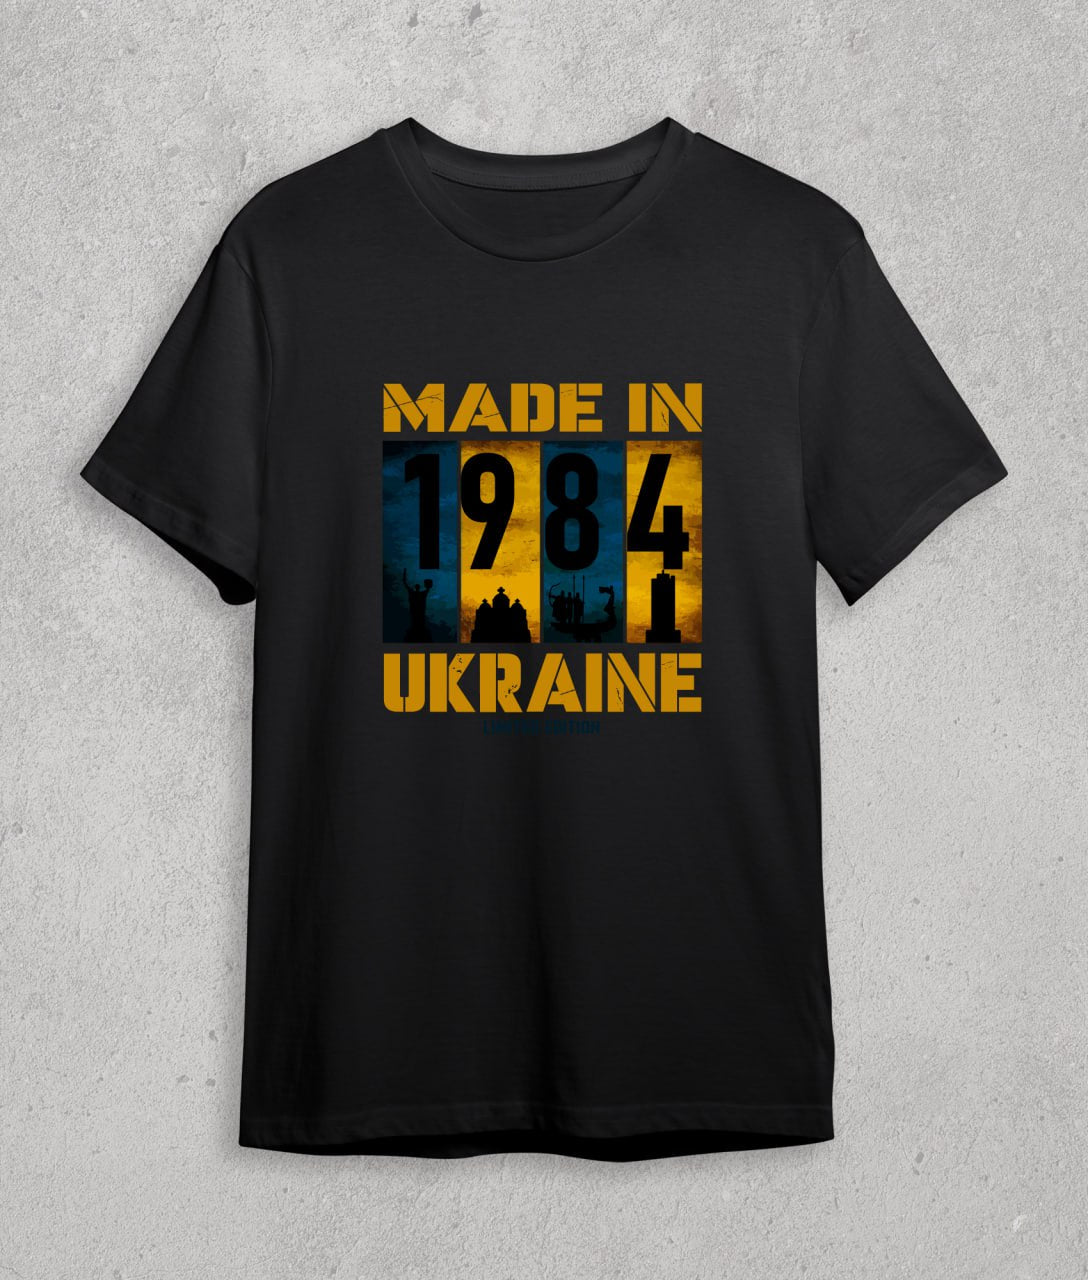 T-shirt "Made in Ukraine" + year